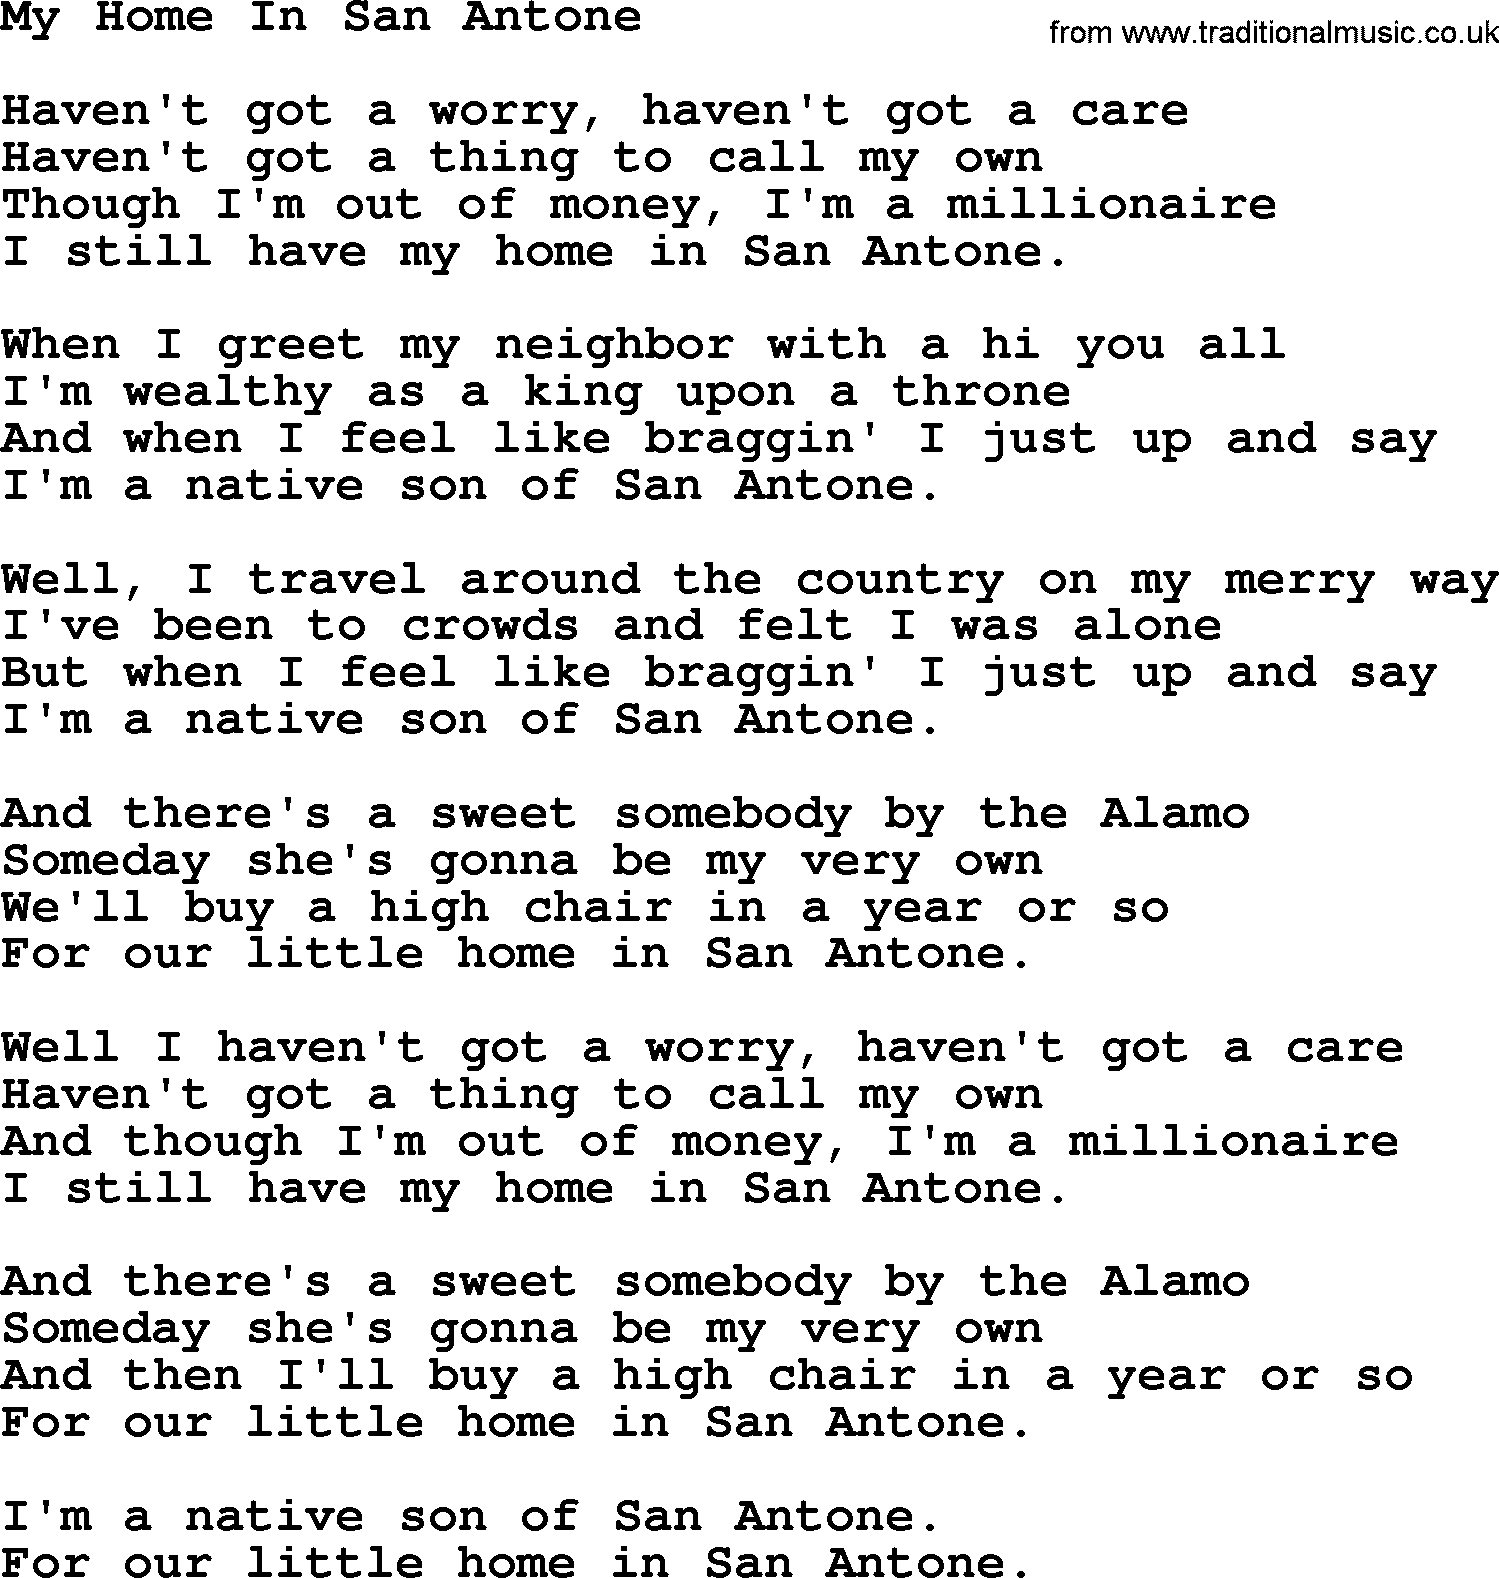 Willie Nelson song: My Home In San Antone lyrics